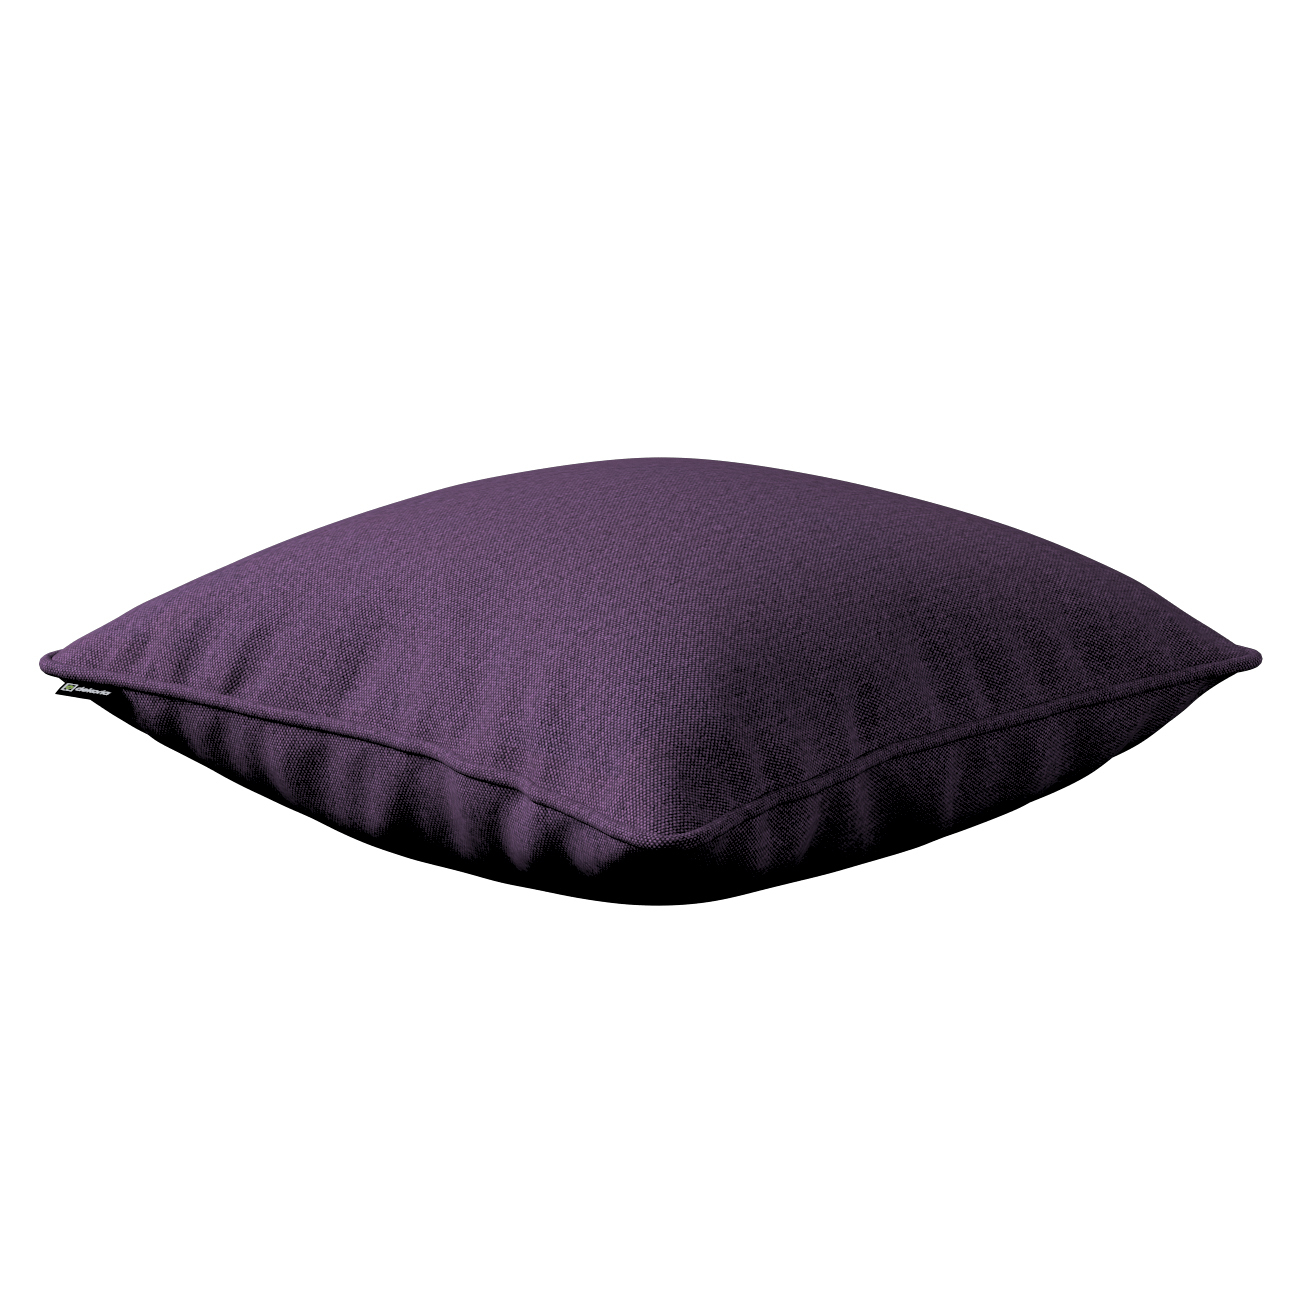 Kissenhülle Gabi mit Paspel, violett, 60 x 60 cm, Etna (161-27) günstig online kaufen